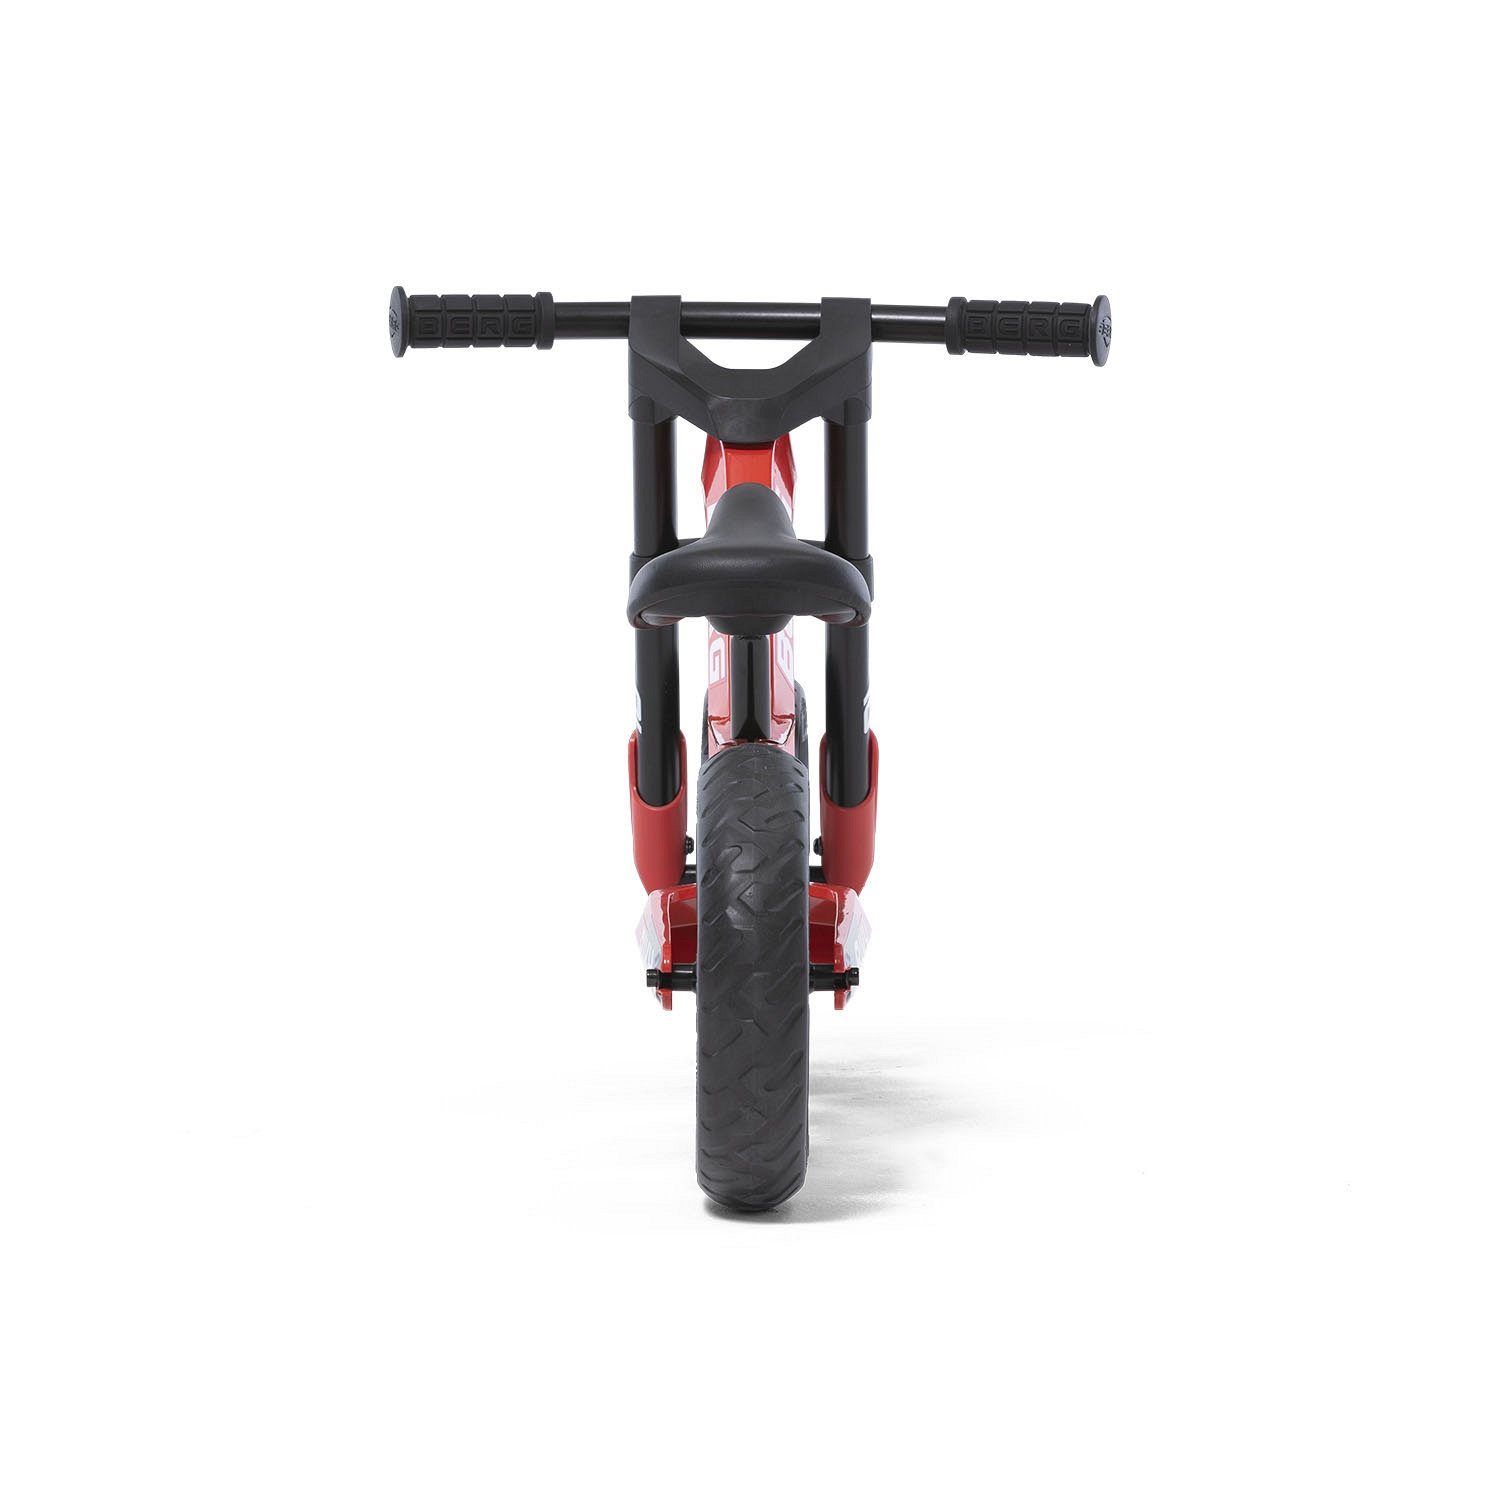 Mini rot Biky Red Laufrad Go-Kart Berg BERG 10"